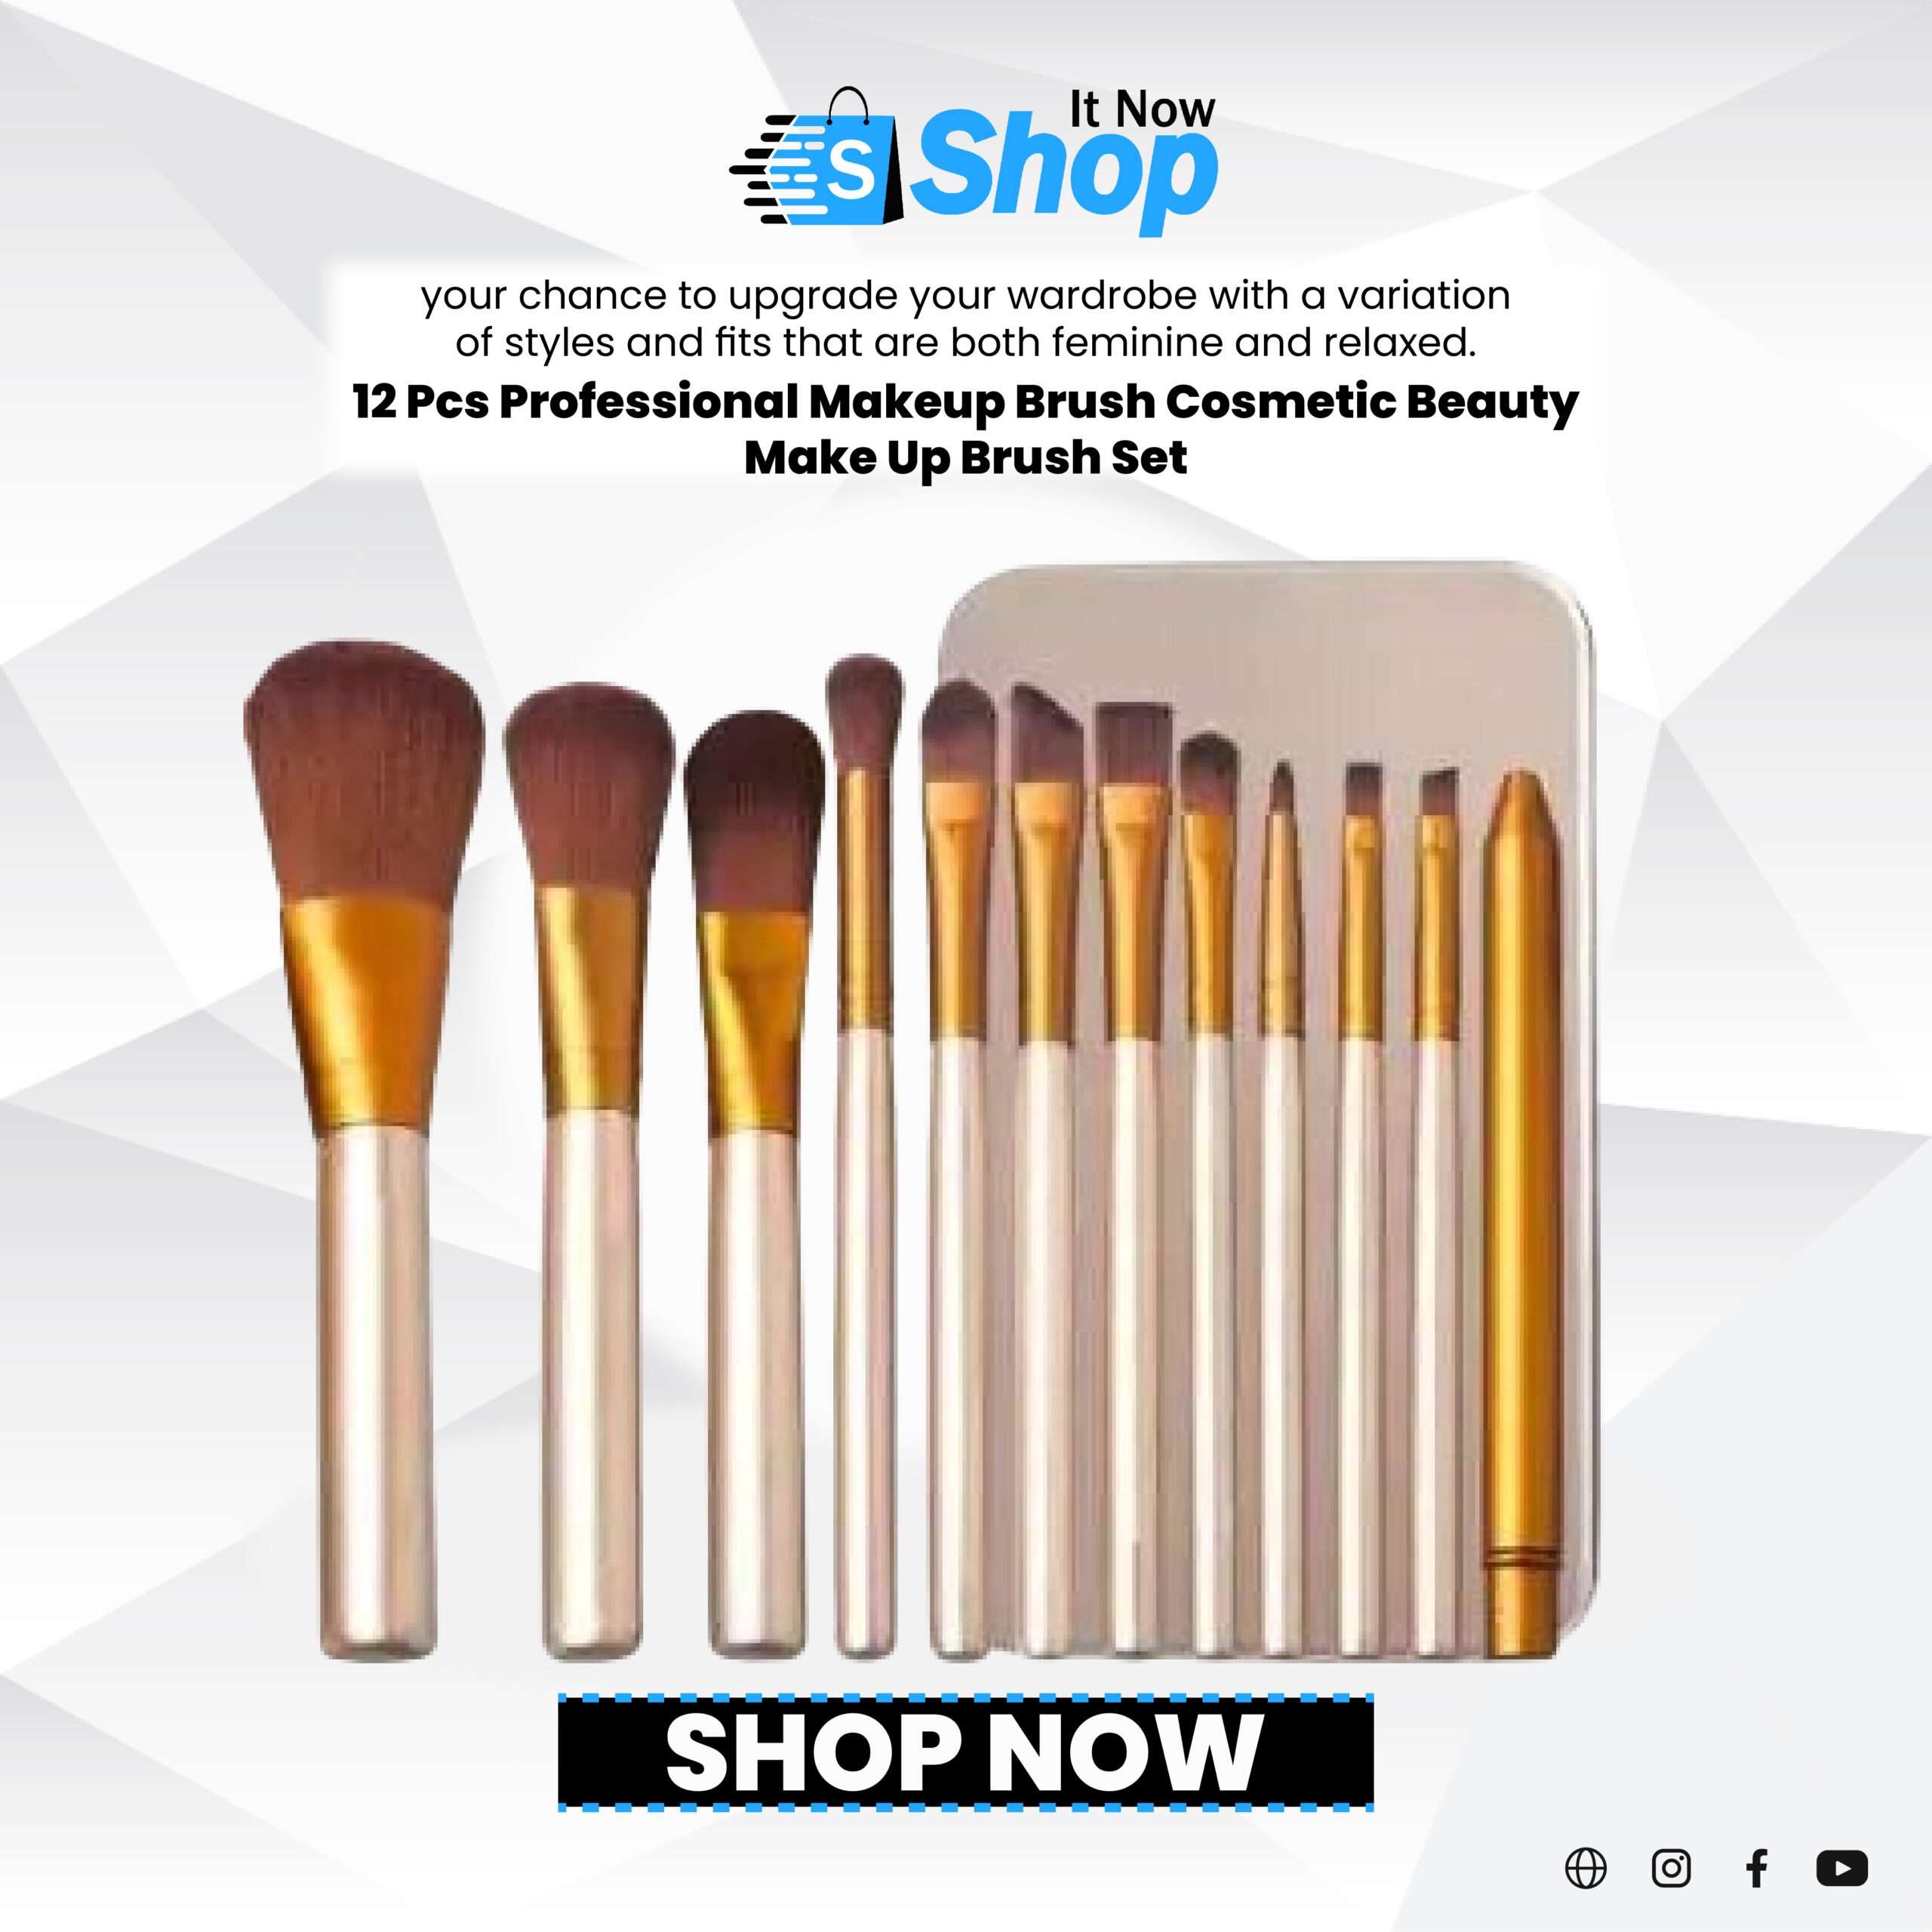 12 Pcs Professional Makeup Brush Cosmetic Beauty Make Up Brush Set